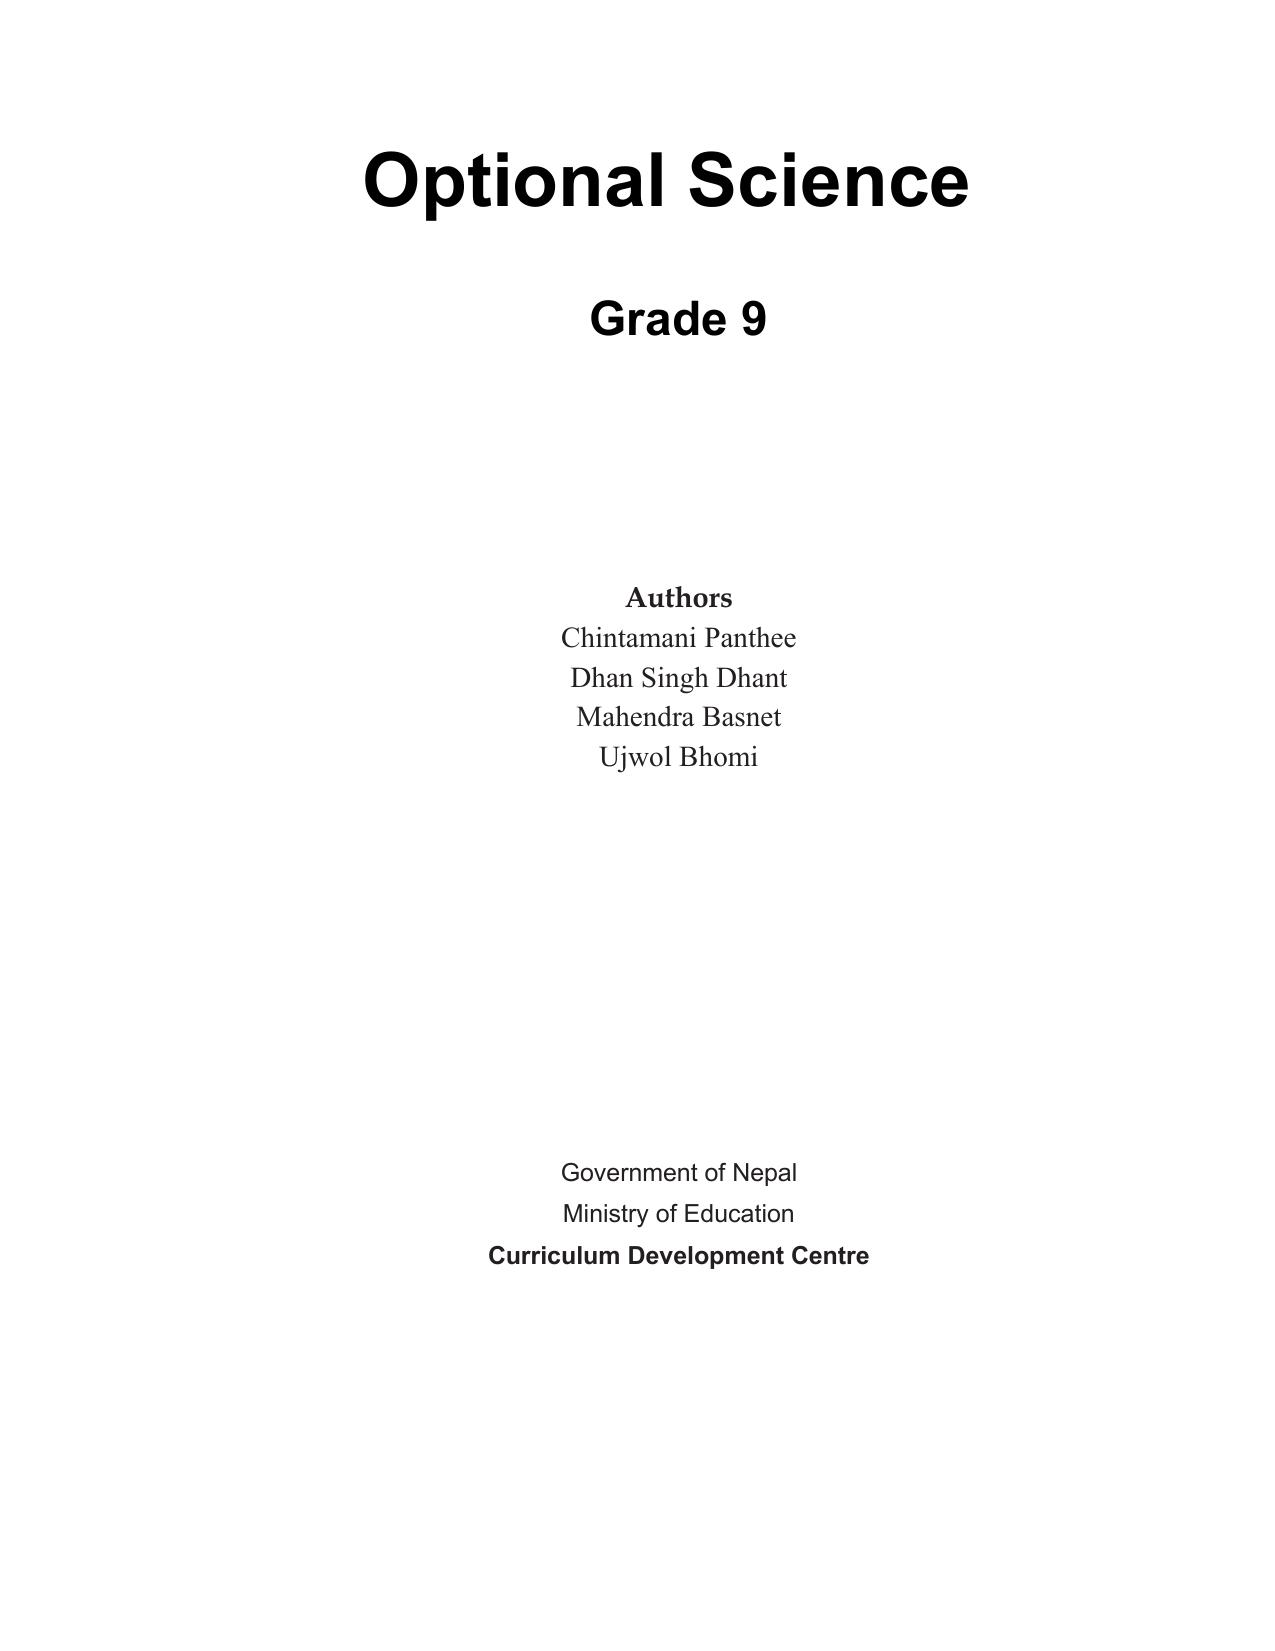 CDC 2017 - Optional Science Grade 9